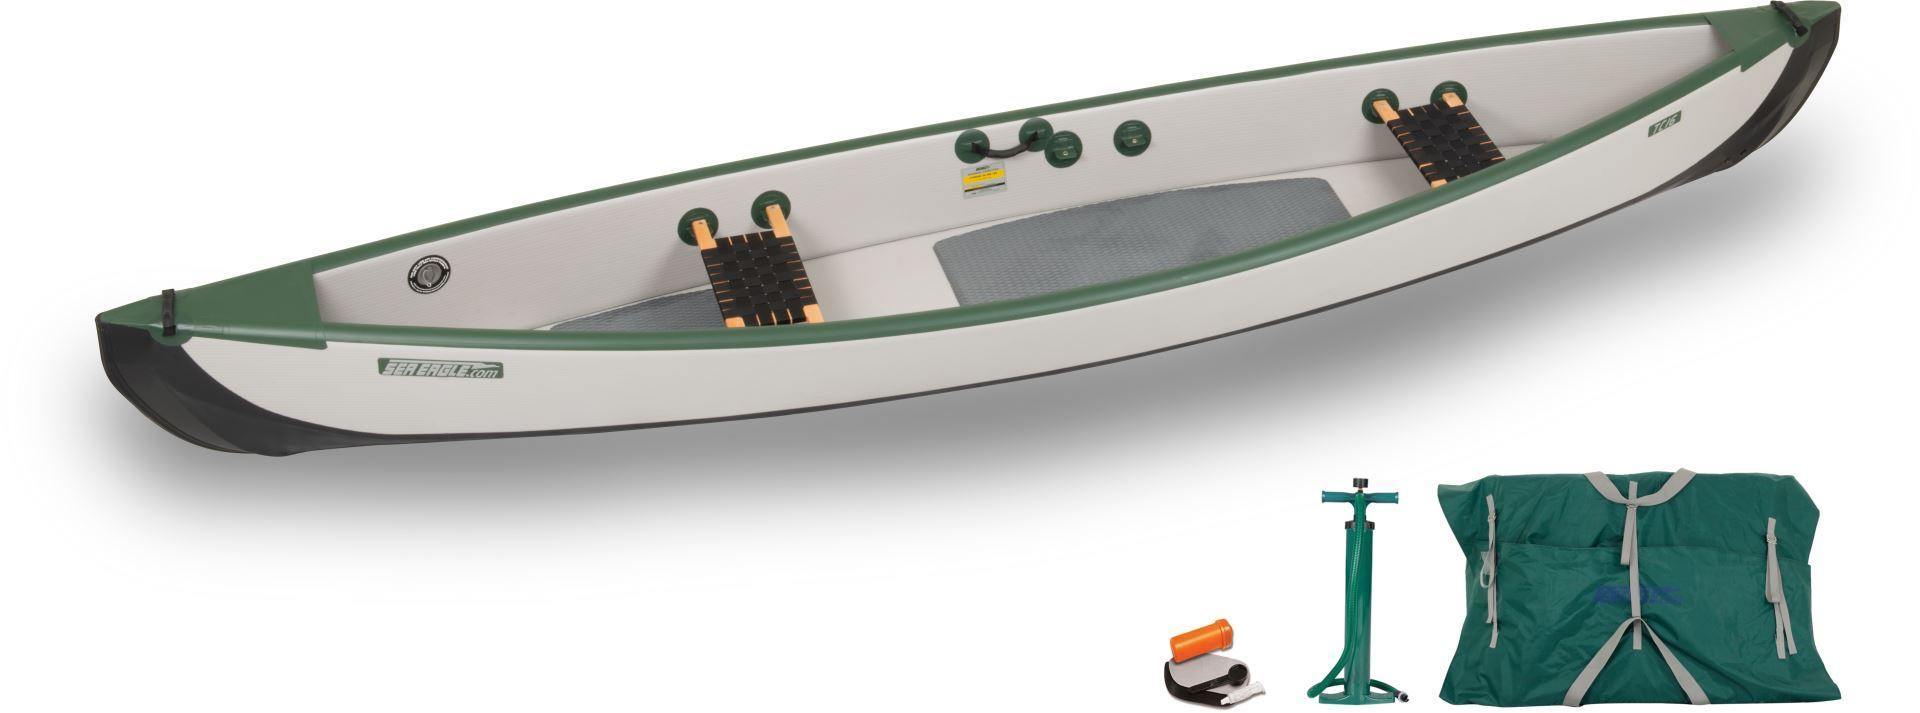 SeaEagle Inflatable Canoe Sea Eagle - TC16 3 Person 16' White/Green Inflatable Travel Canoe Wood/Web Seats Electric Pump Package ( TC16K_EP3W )